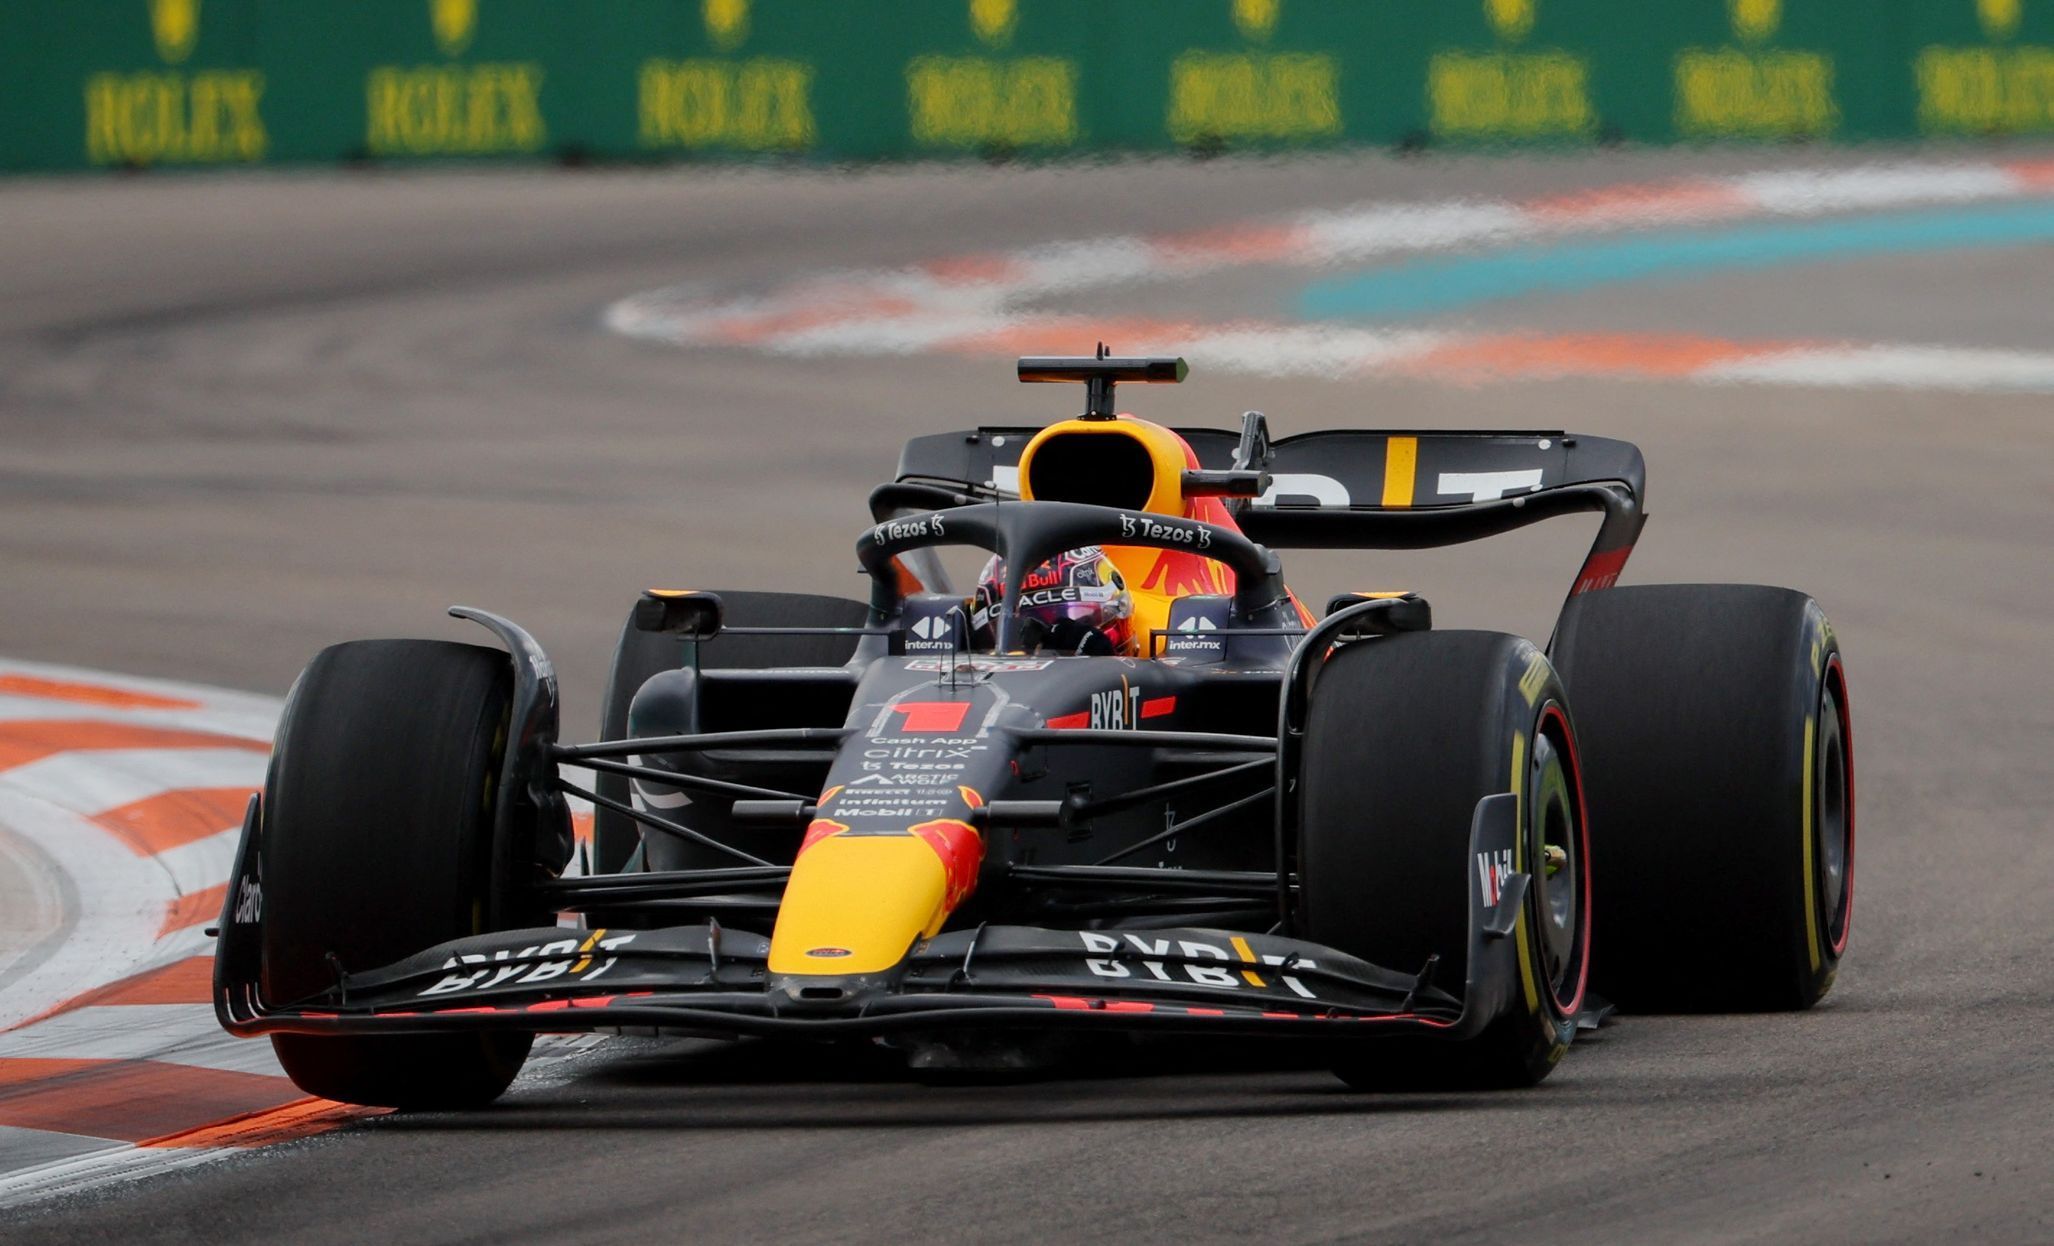 Max Verstappen, Red Bull ve VC Miami formule 1 2022